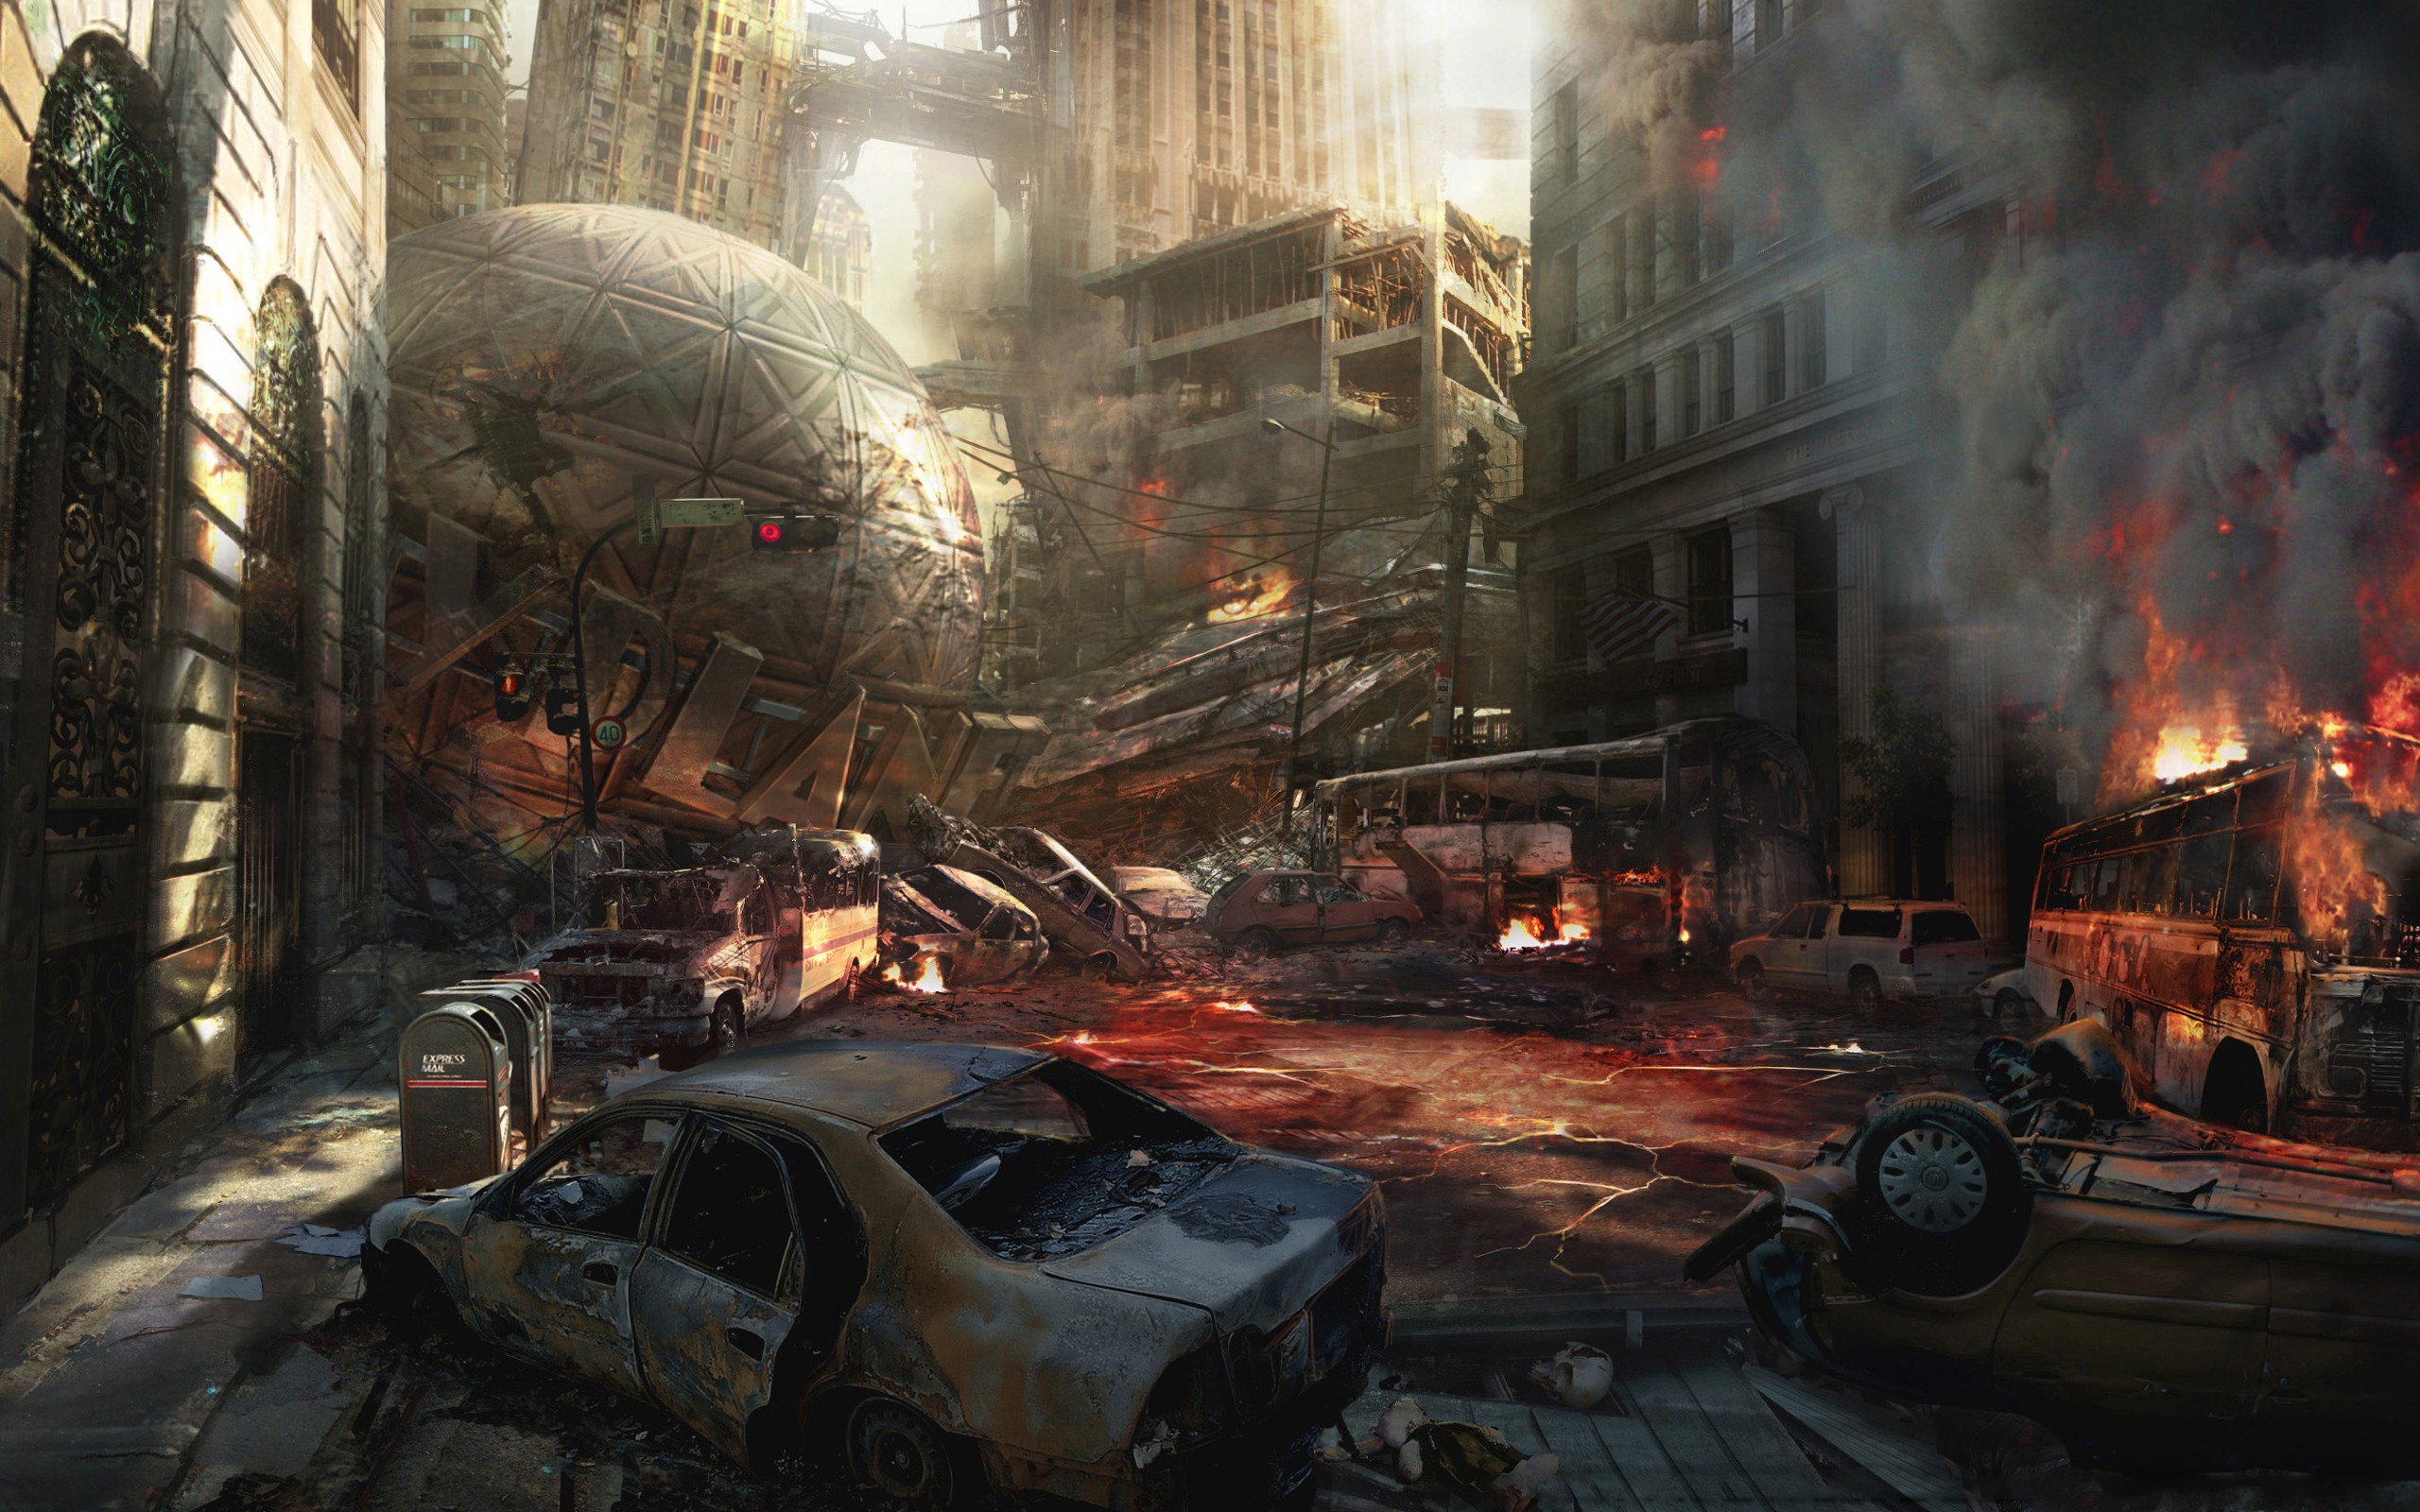 General 2560x1600 artwork destruction airplane crash ruins city Netherrealm Studios video games video game art Injustice God's among us